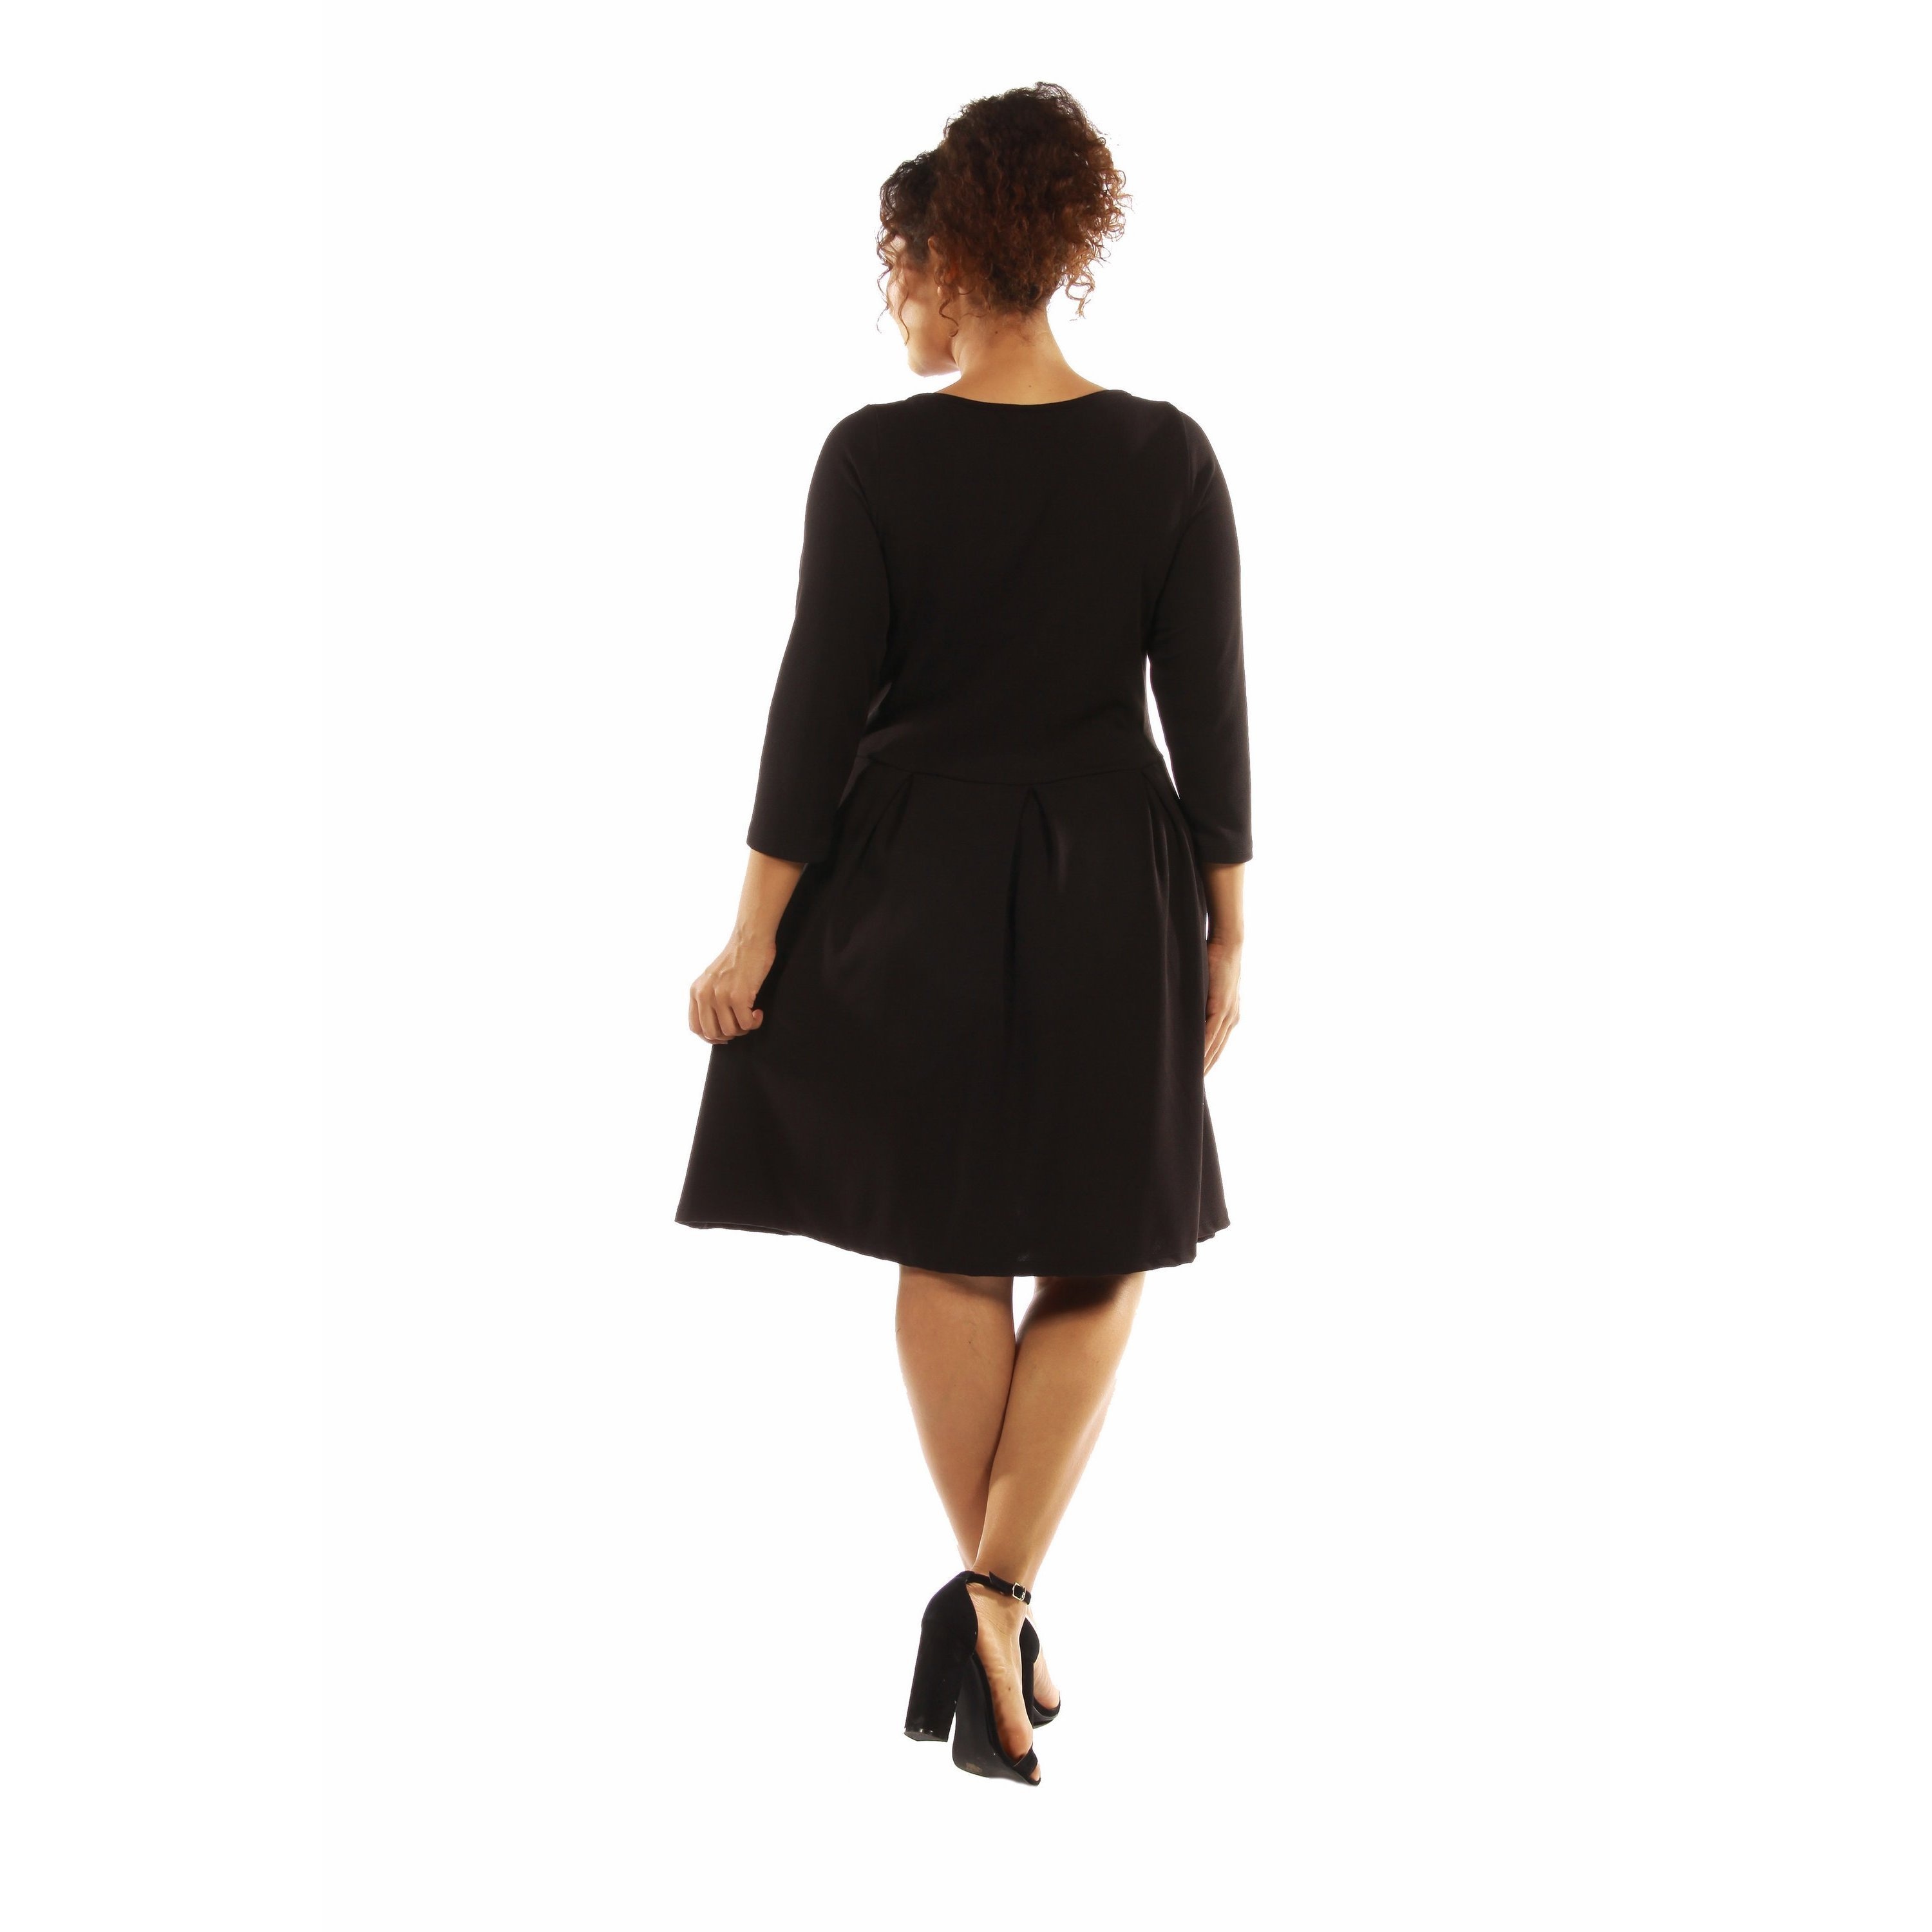 black dress size 24